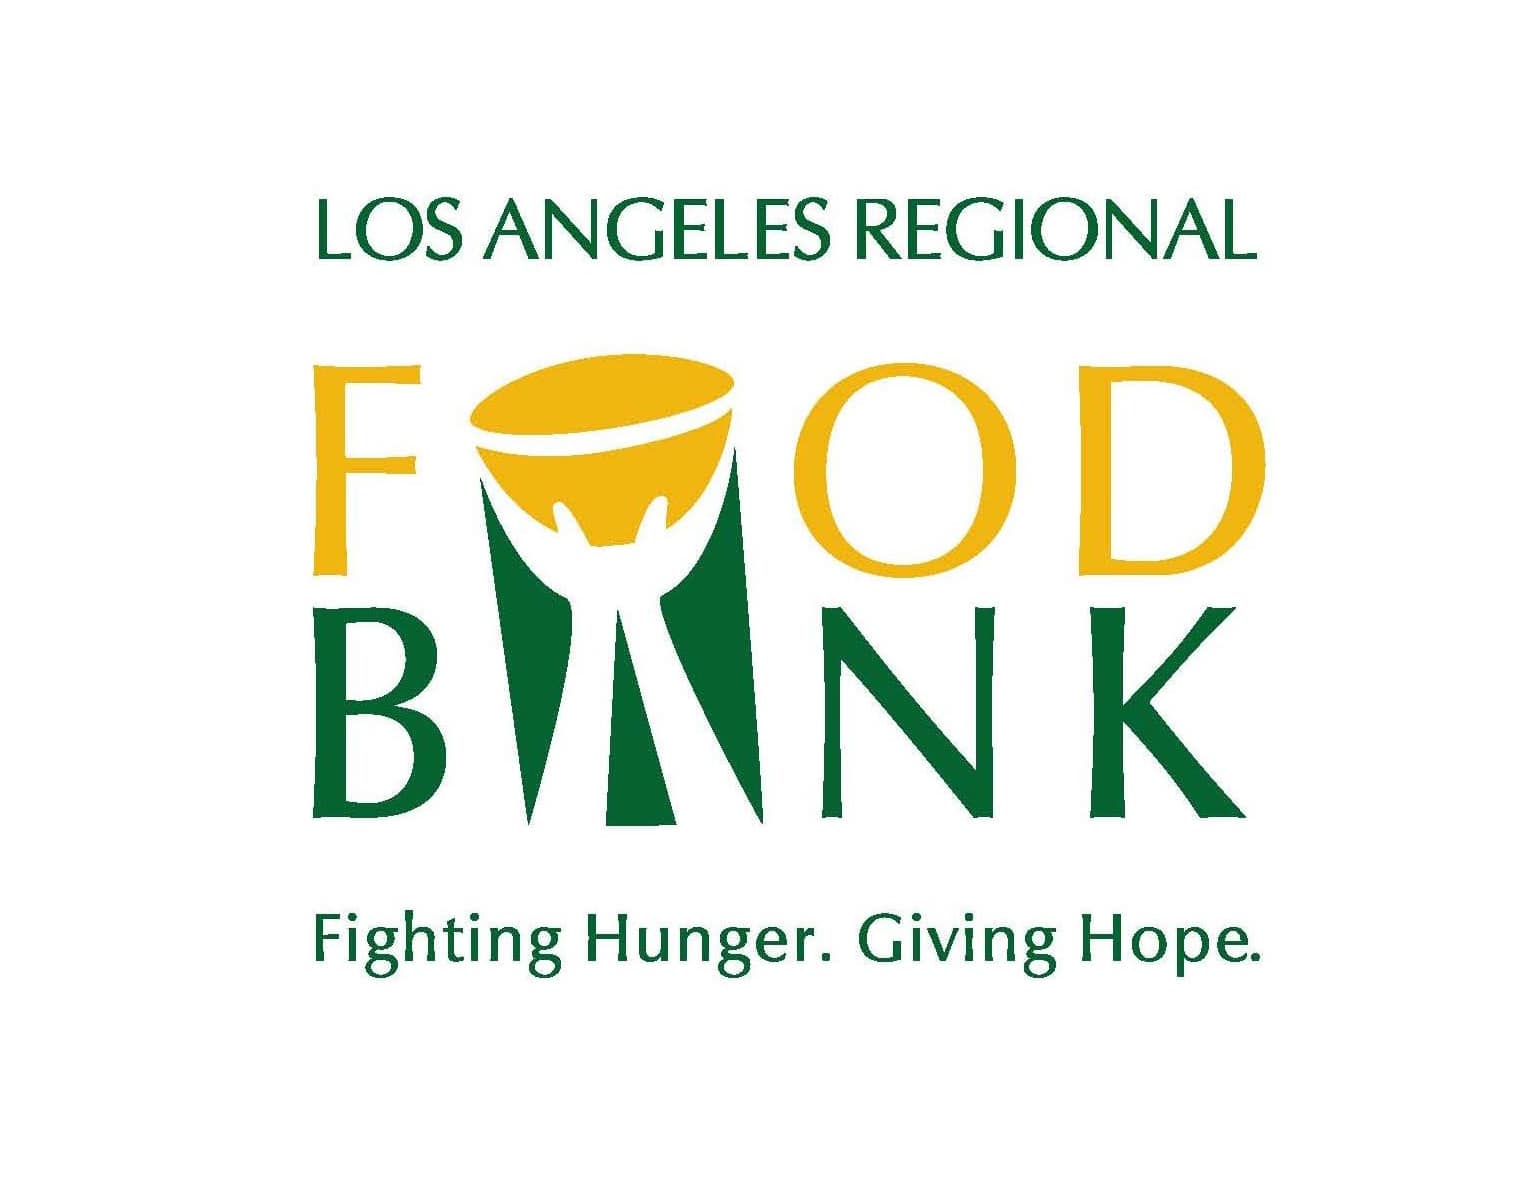 Logo of Food Bank organization